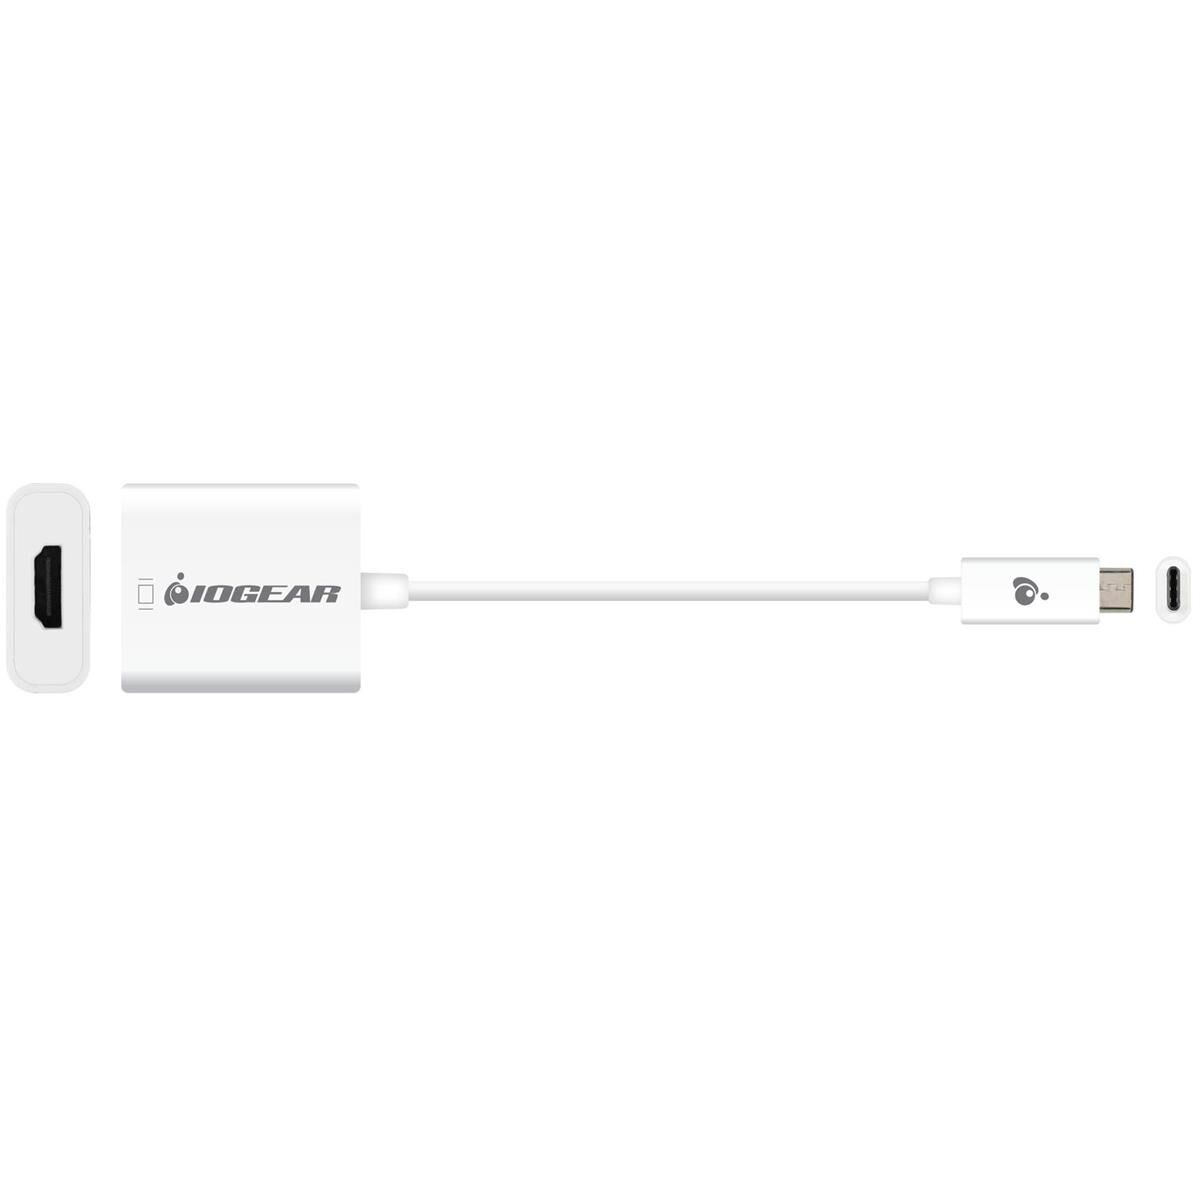 IOGear USB 3.0 Type-C to HDMI Adapter